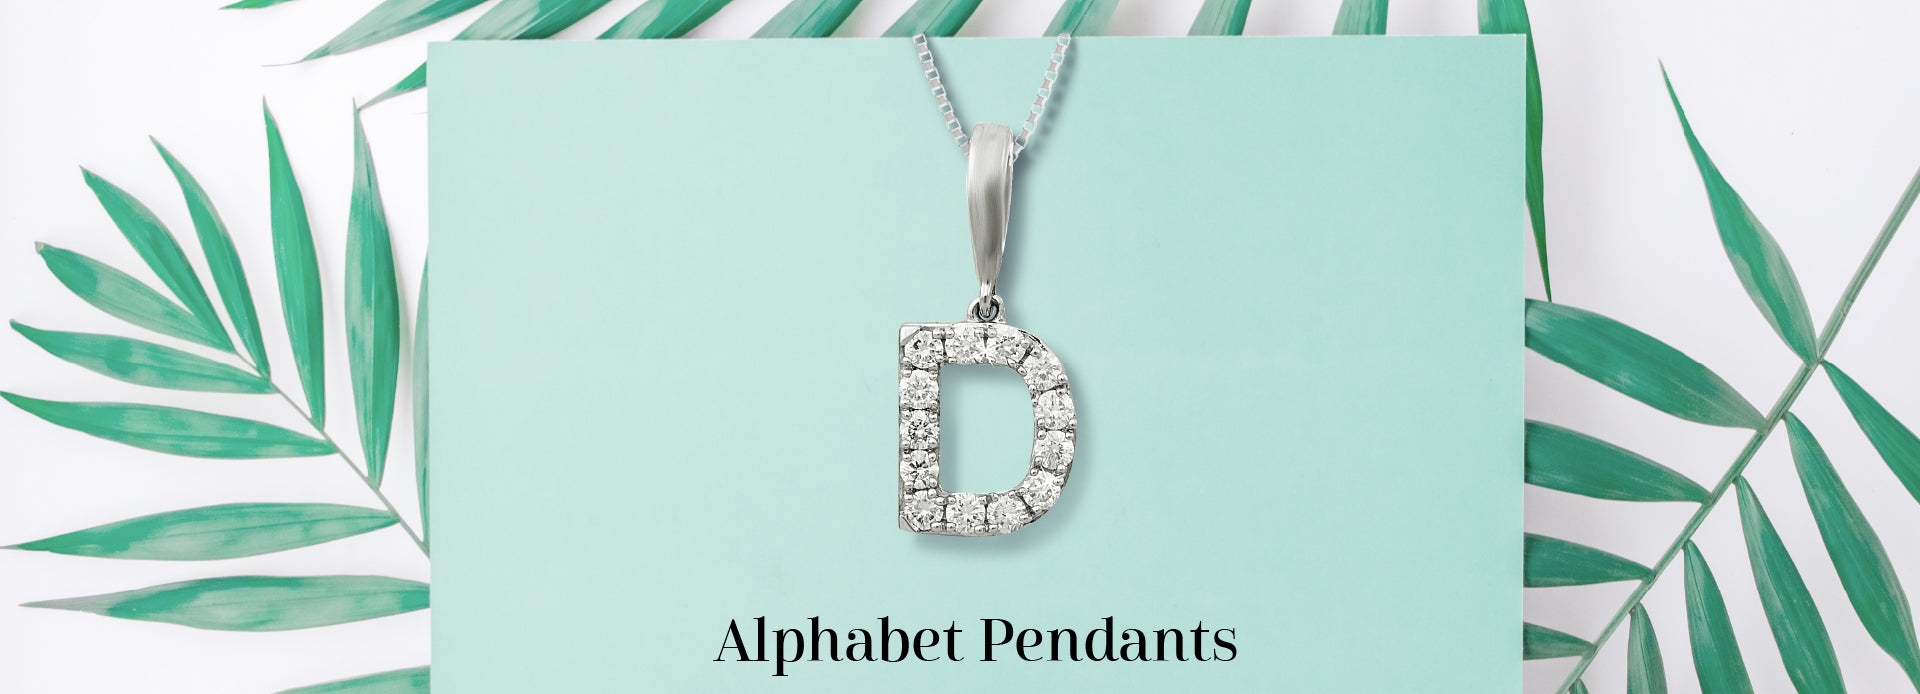 Alphabet pendants